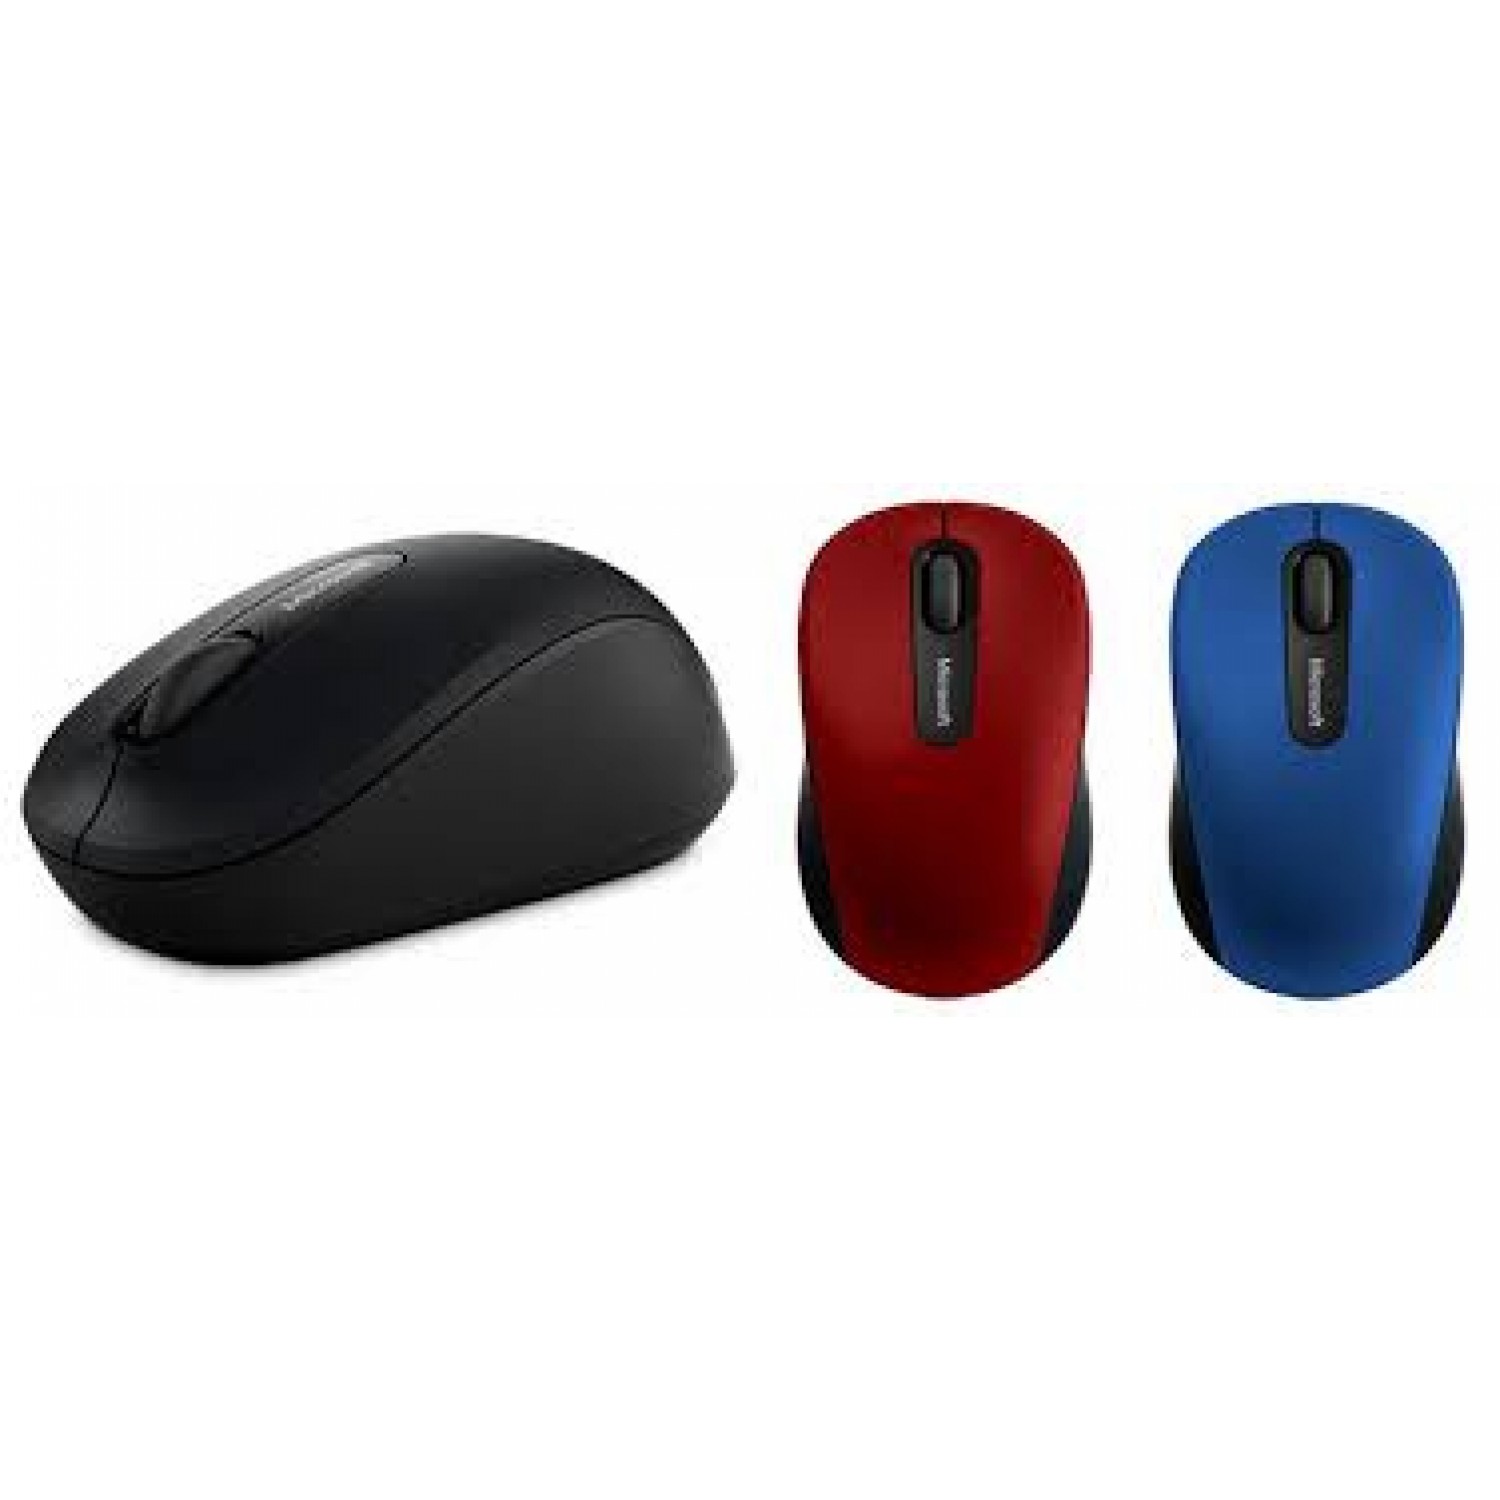  Microsoft Mobile 3600 Mouse